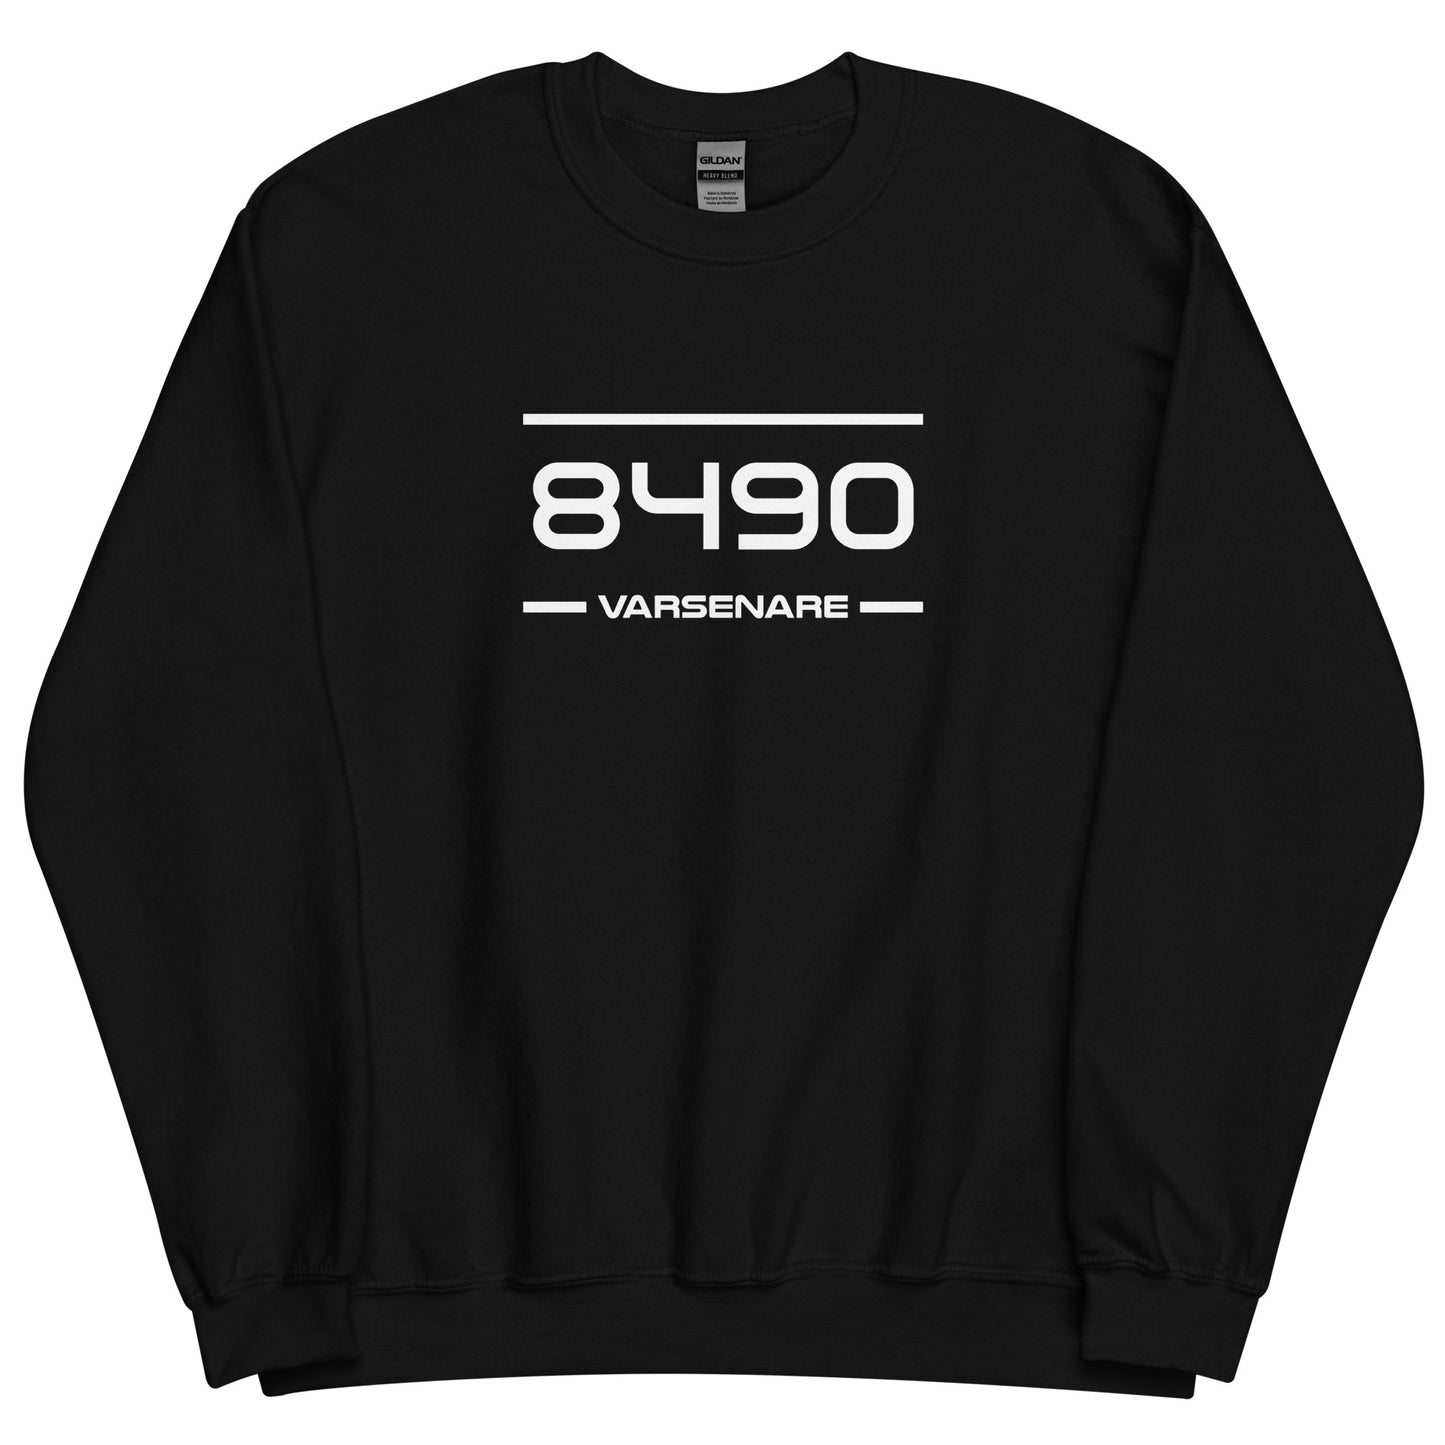 Sweater - 8490 - Varsenare (M/V)